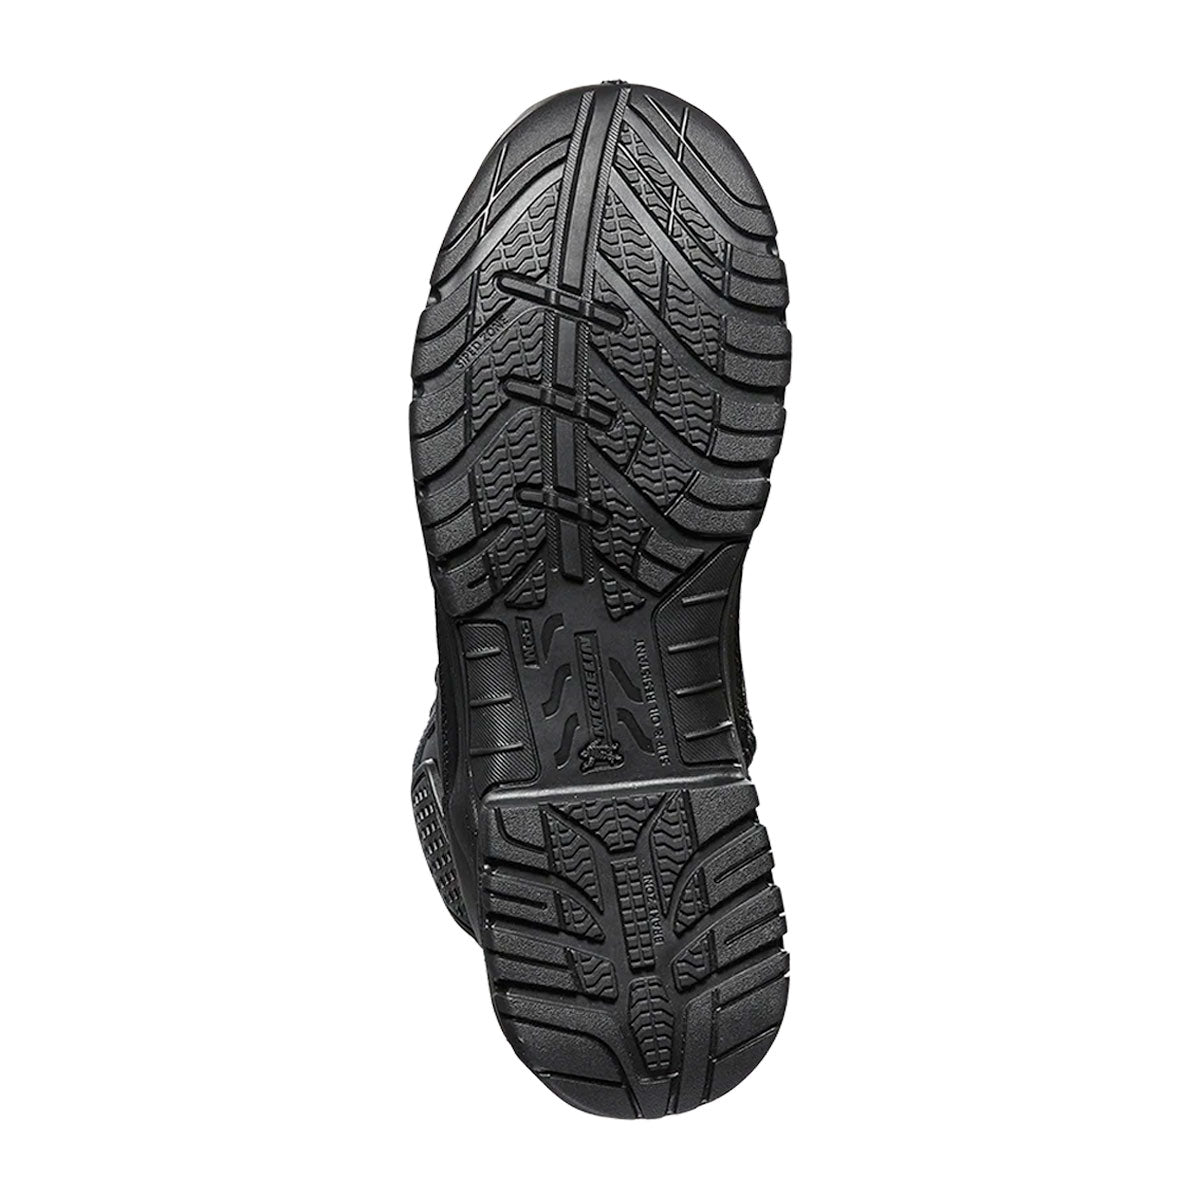 Magnum Strike Force 6.0 Leather Side-Zip Composite Toe Waterproof Boot Black Tactical Distributors Ltd New Zealand